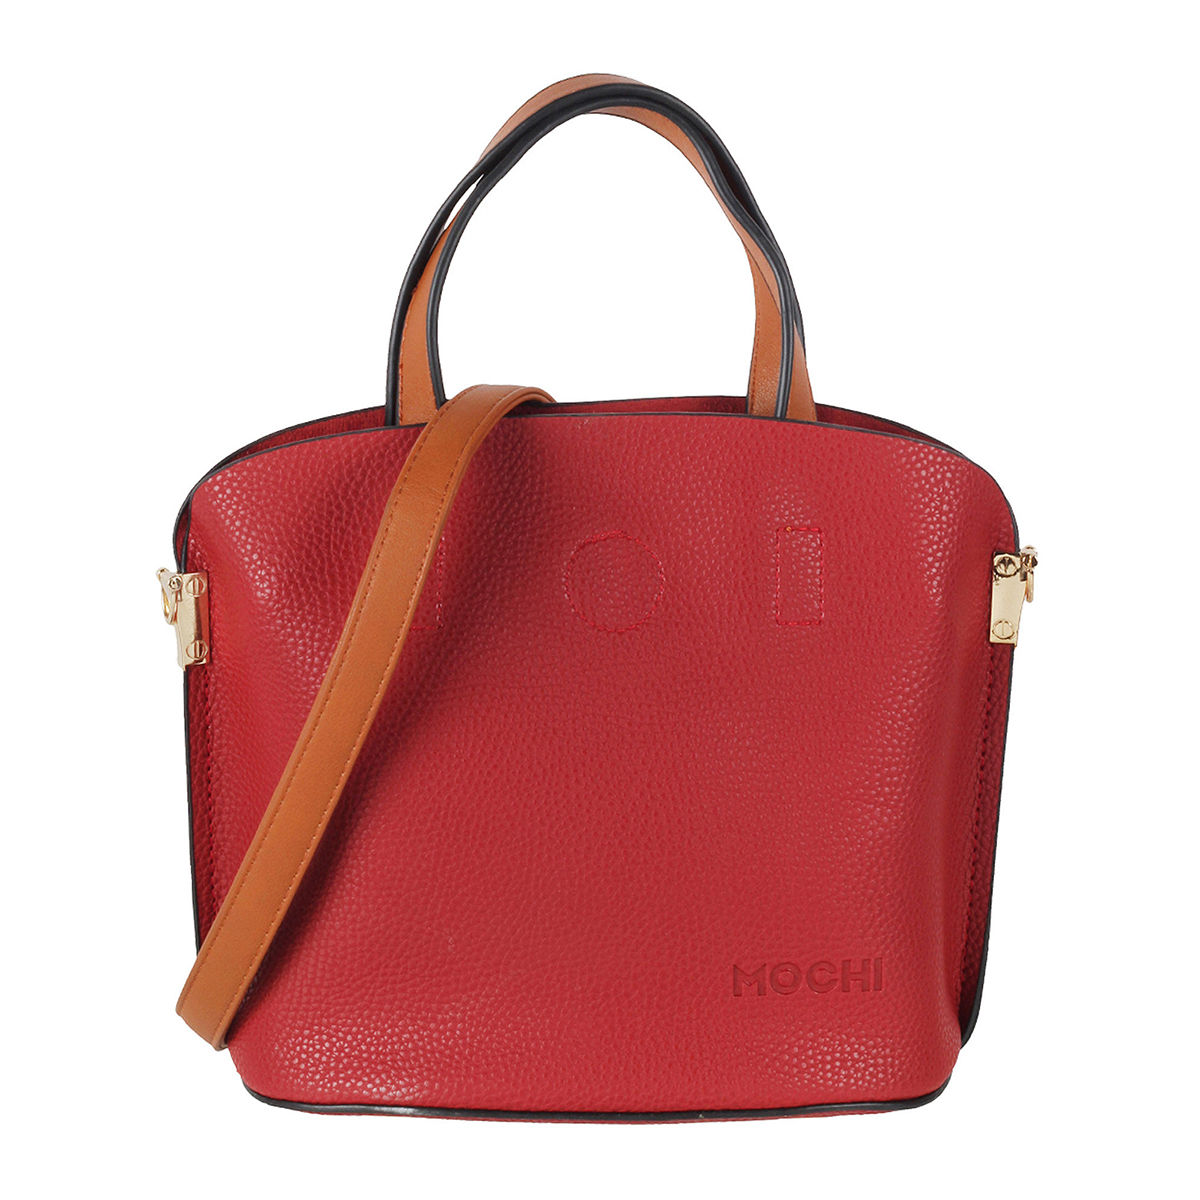 Buy Blue Handbags for Women by Mochi Online | Ajio.com